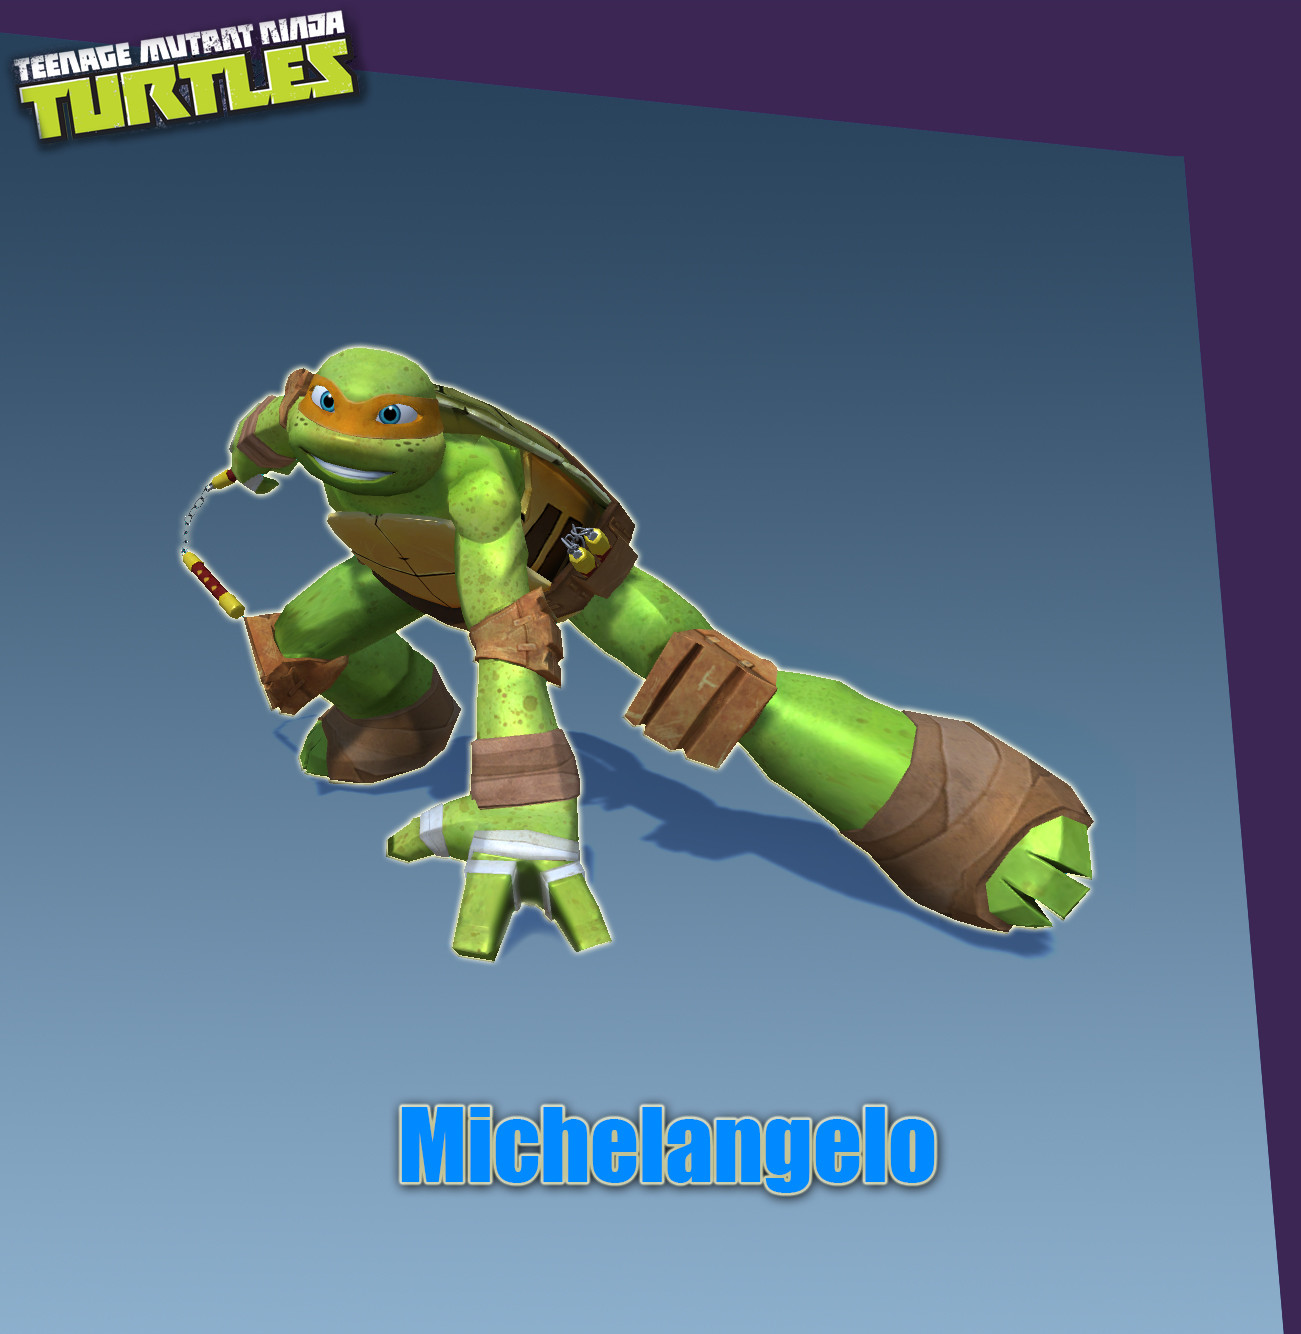 Teenage Mutant Ninja Turtles Mobile Game Announced